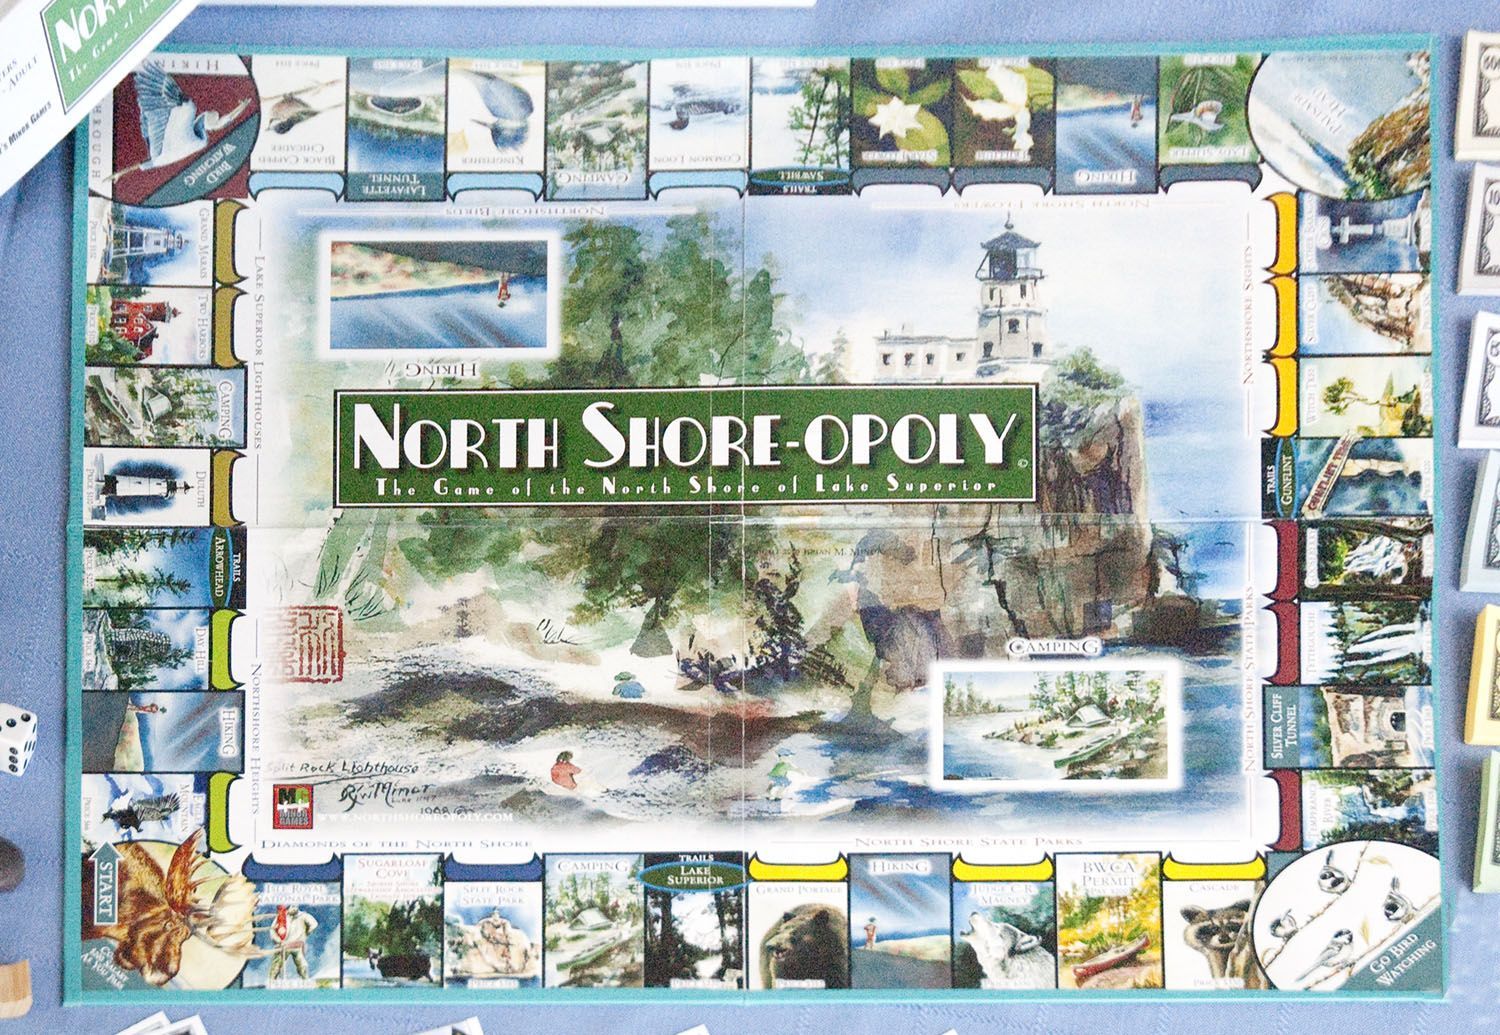 North Shore-opoly